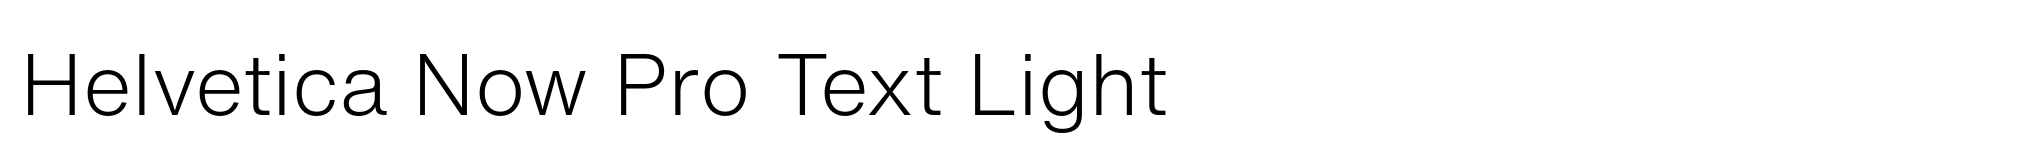 Helvetica Now Pro Text Light image